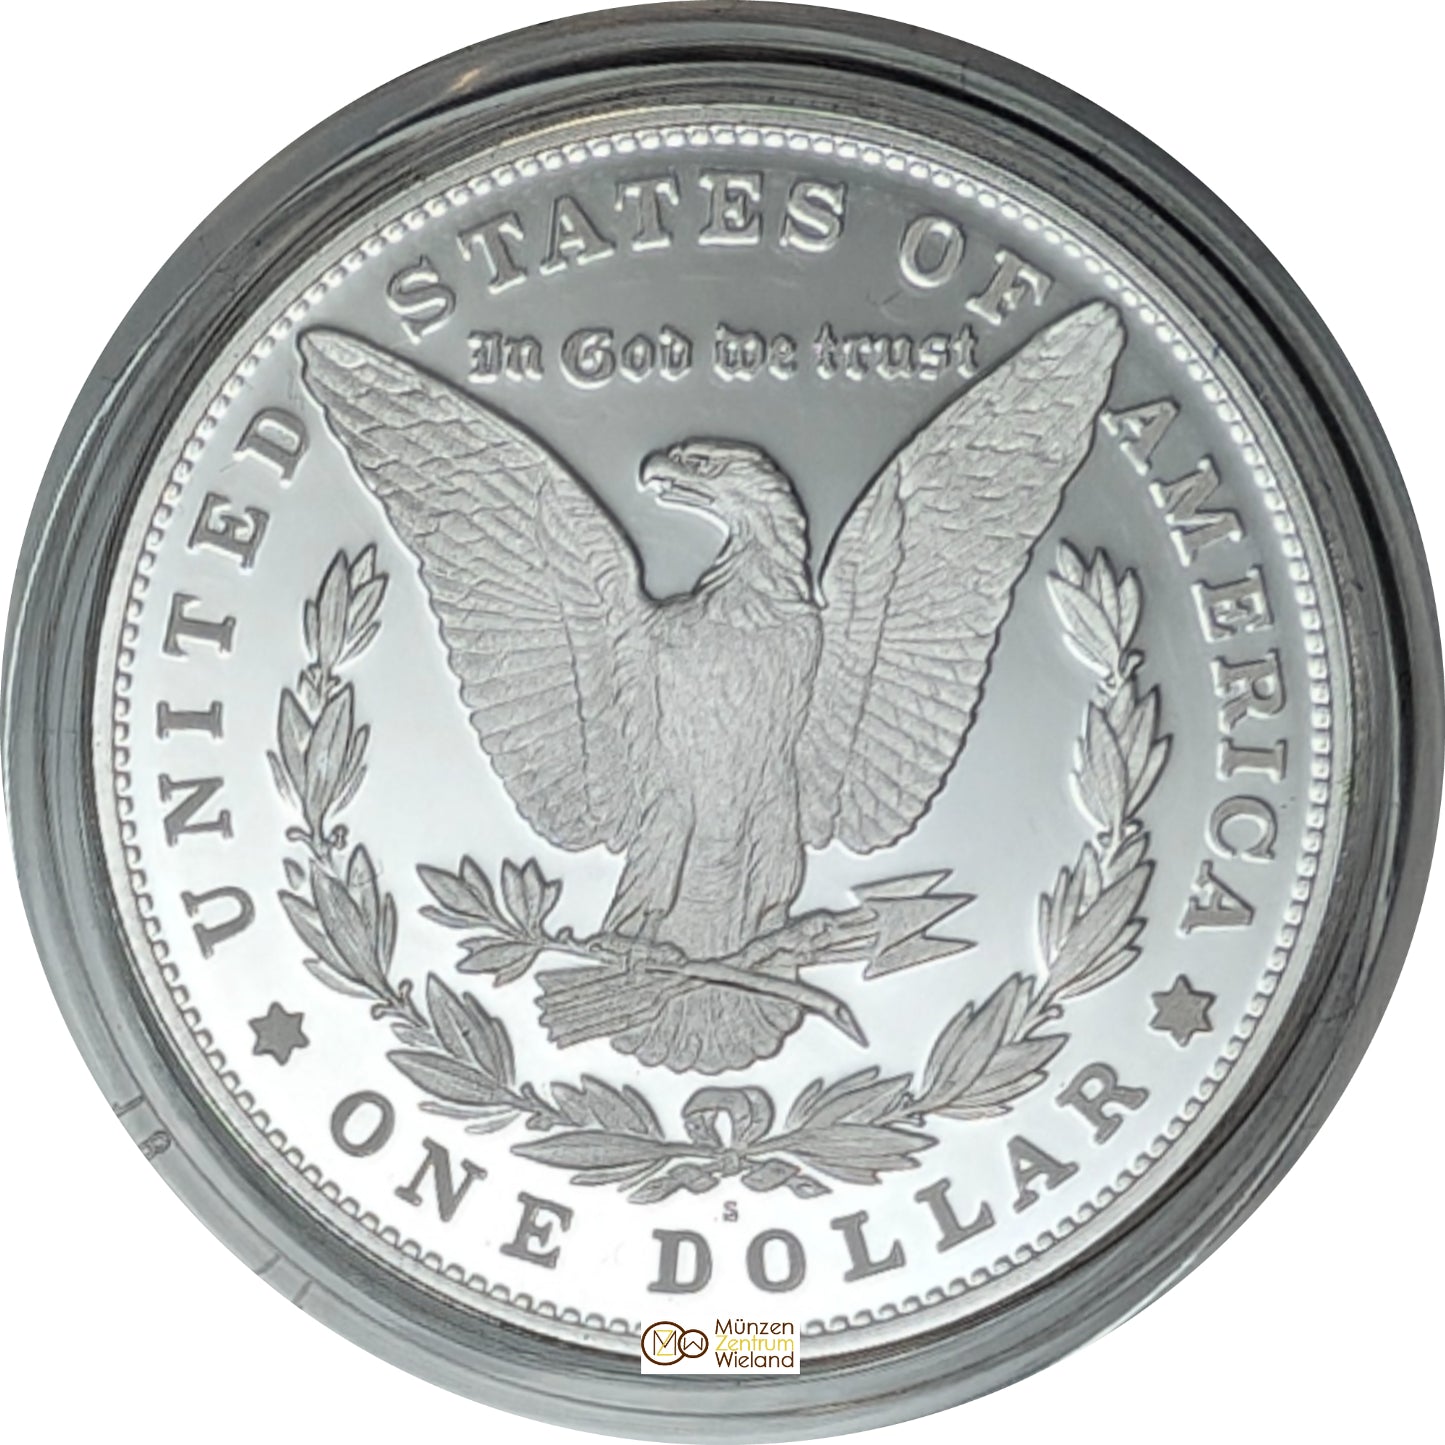 Morgan Silver Dollar, San Francisco